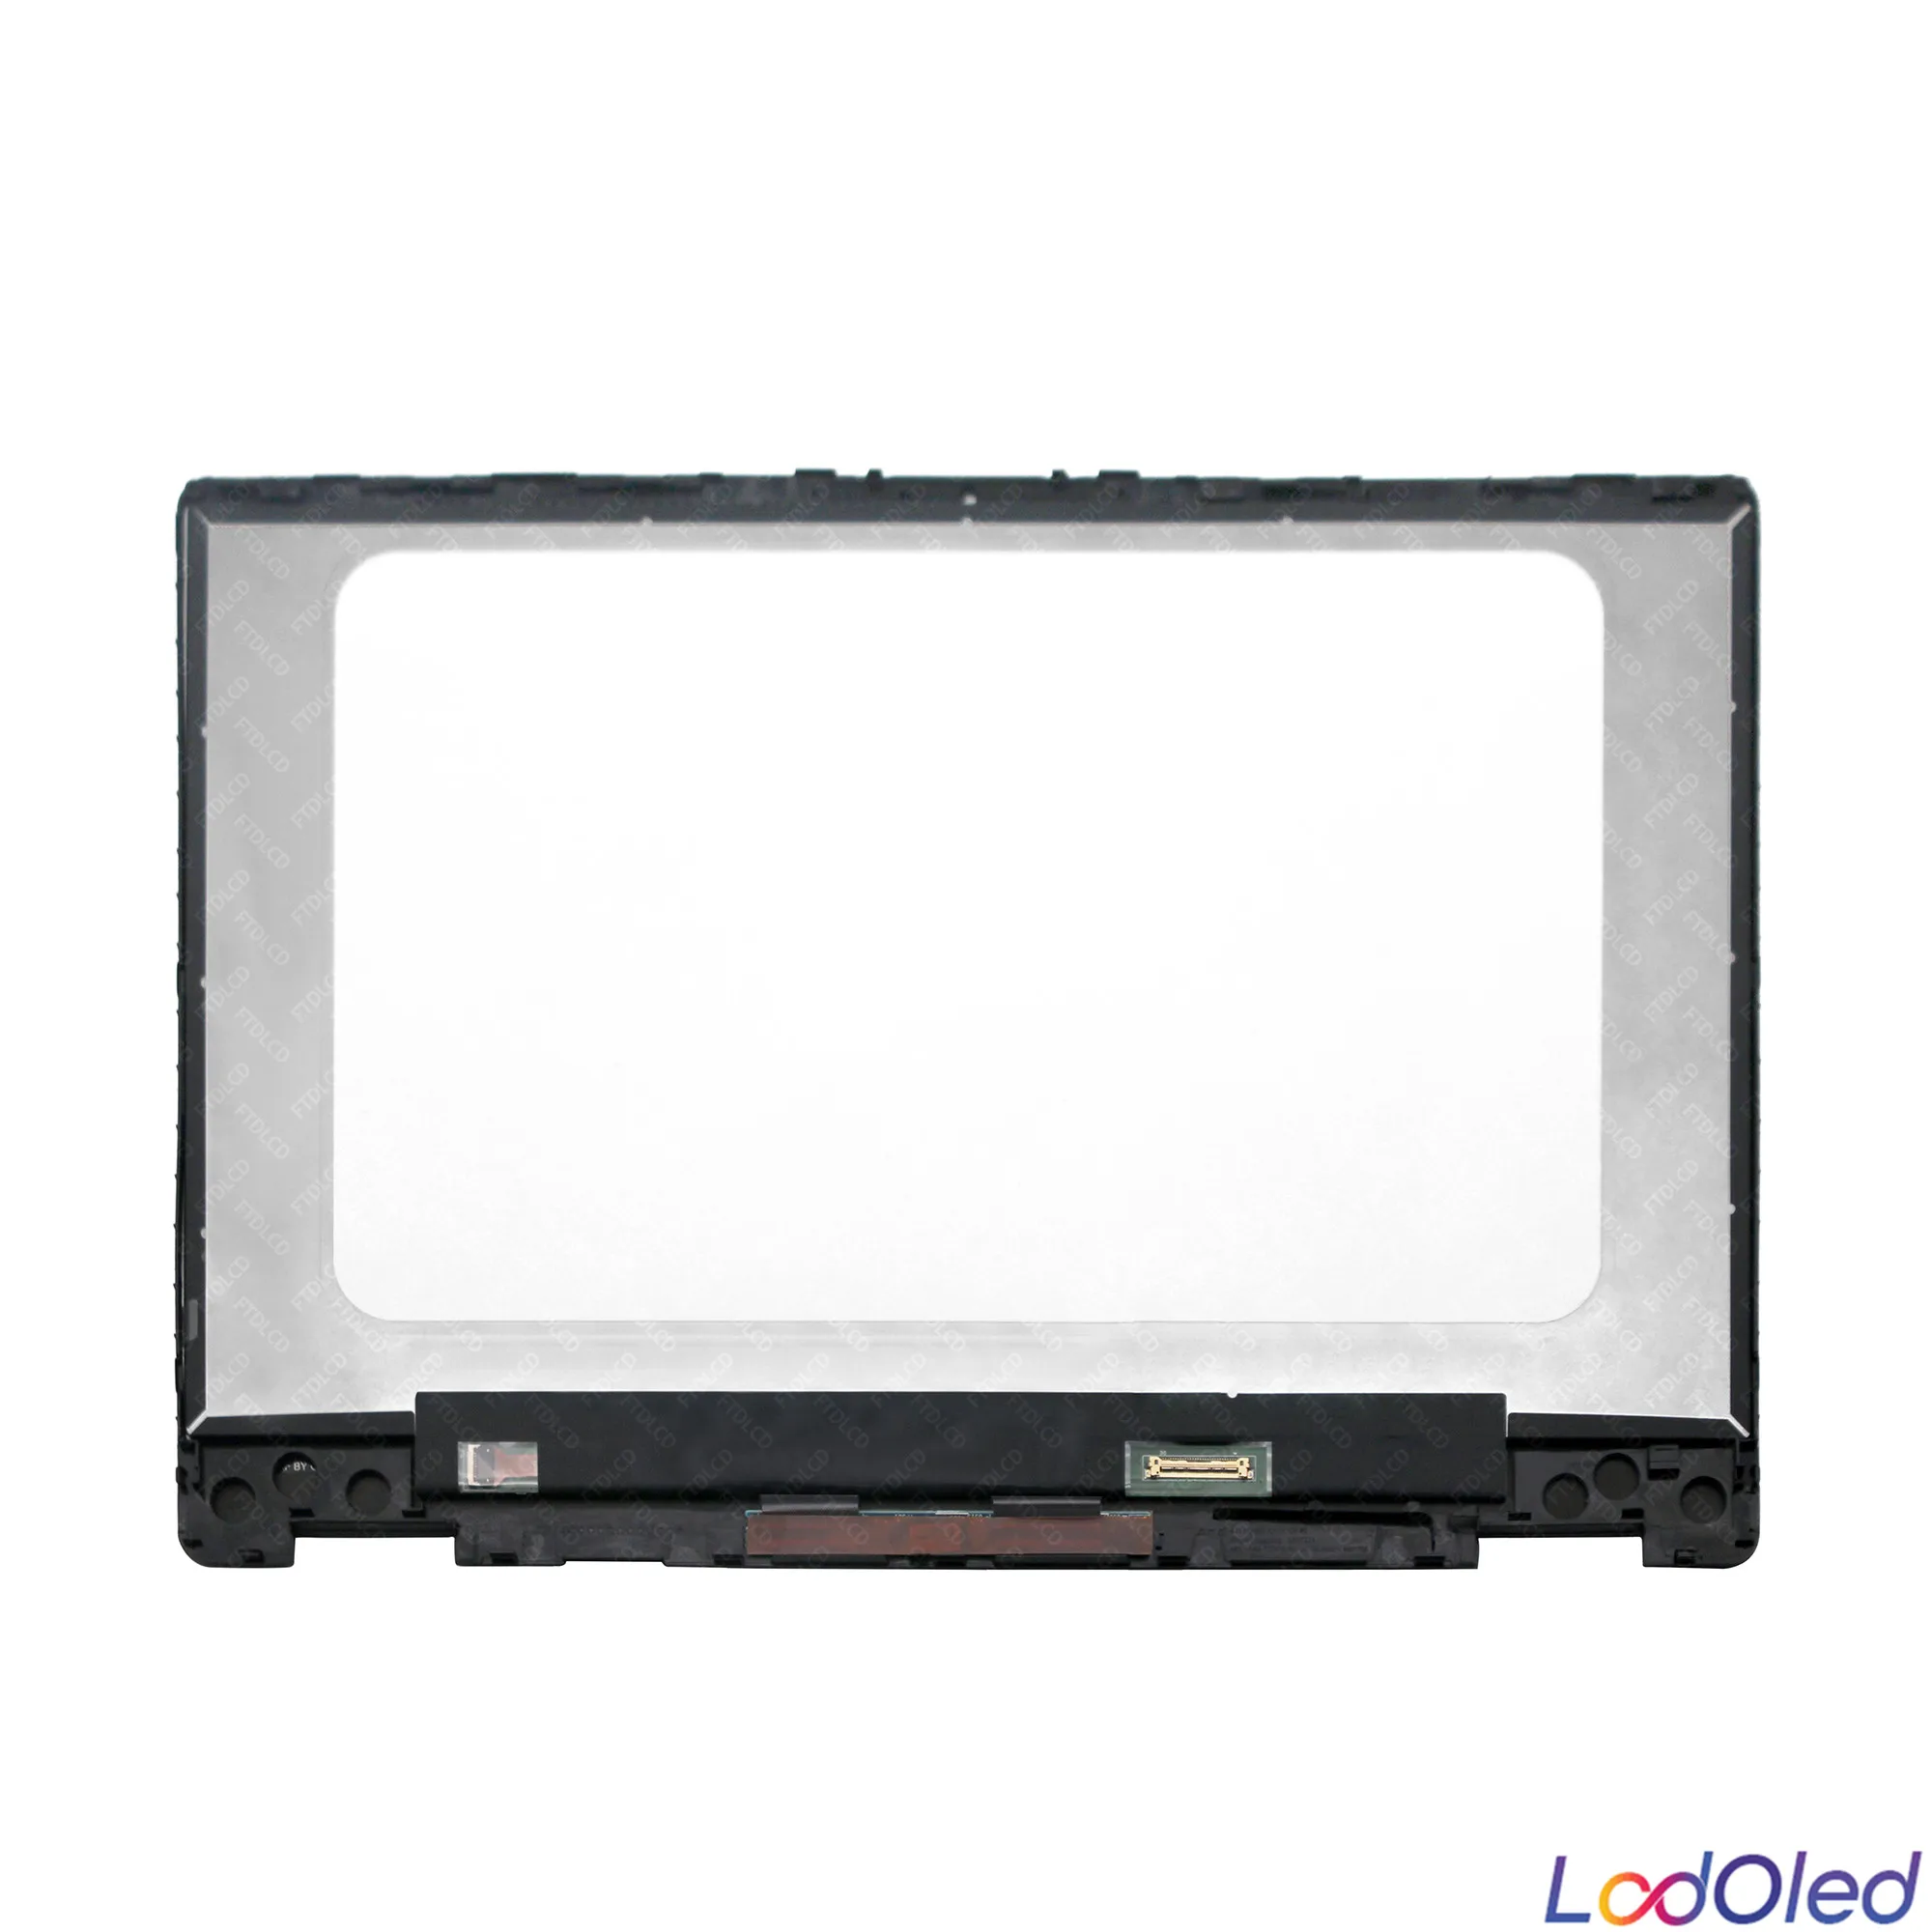 LCD Ekran Ekran Dokunmatik Sayısallaştırıcı Cam Meclisi için HP Pavilion 14-dh1000ng 14-dh1001ng 14-dh1003ng 14-dh1133ng 14-dh1135ng